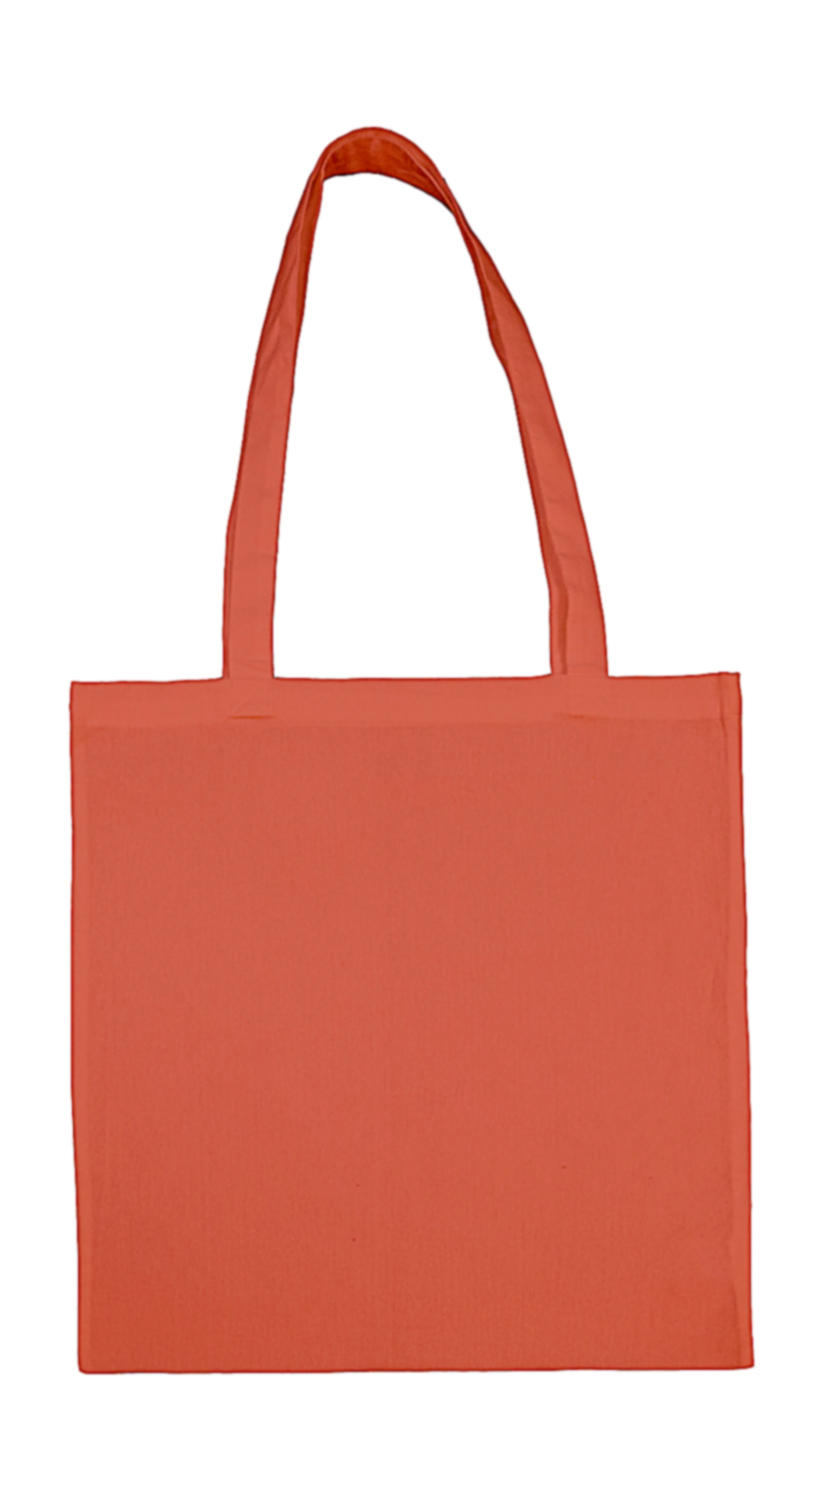  Cotton Bag LH in Farbe Apricot Brandy